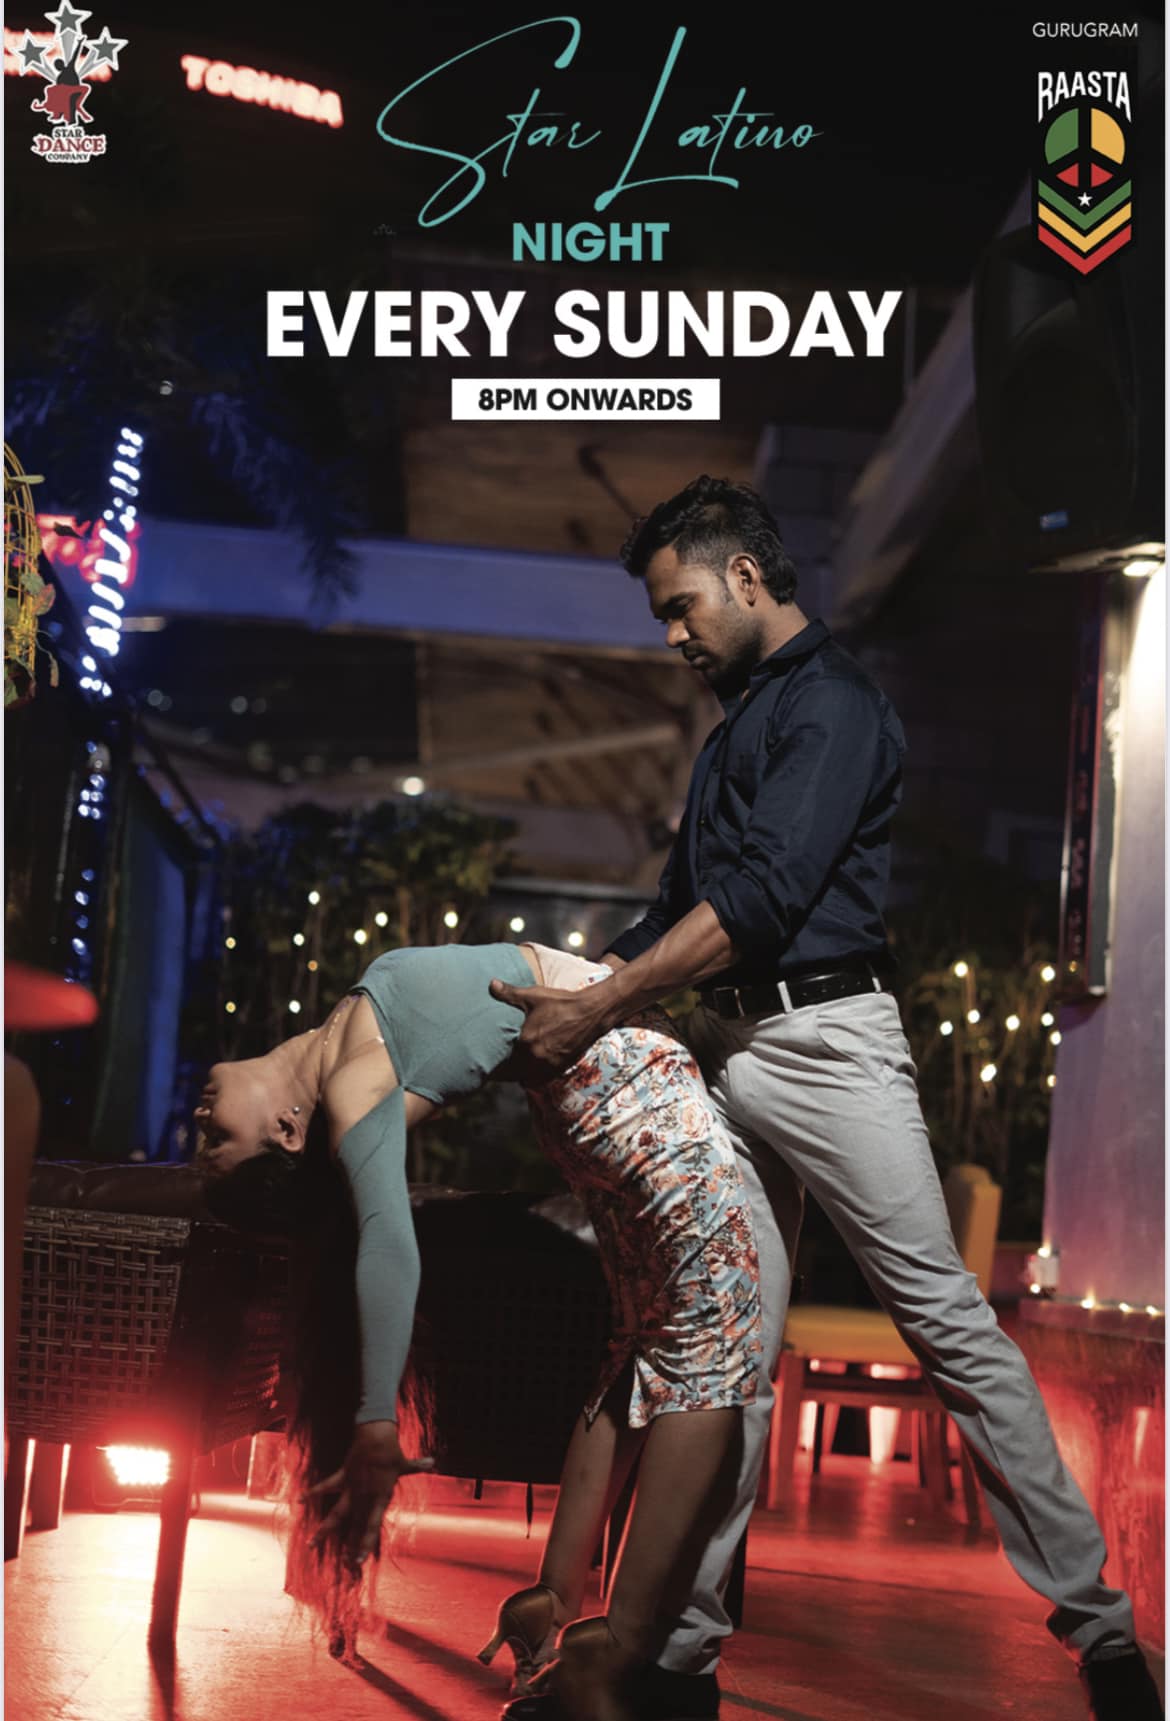 Gurugram Delhi NCR Salsa Bachata Kizomba Social Dance Night Sunday - Star Dance Company – Raasta DLF Cyberhub DLF Cyber City